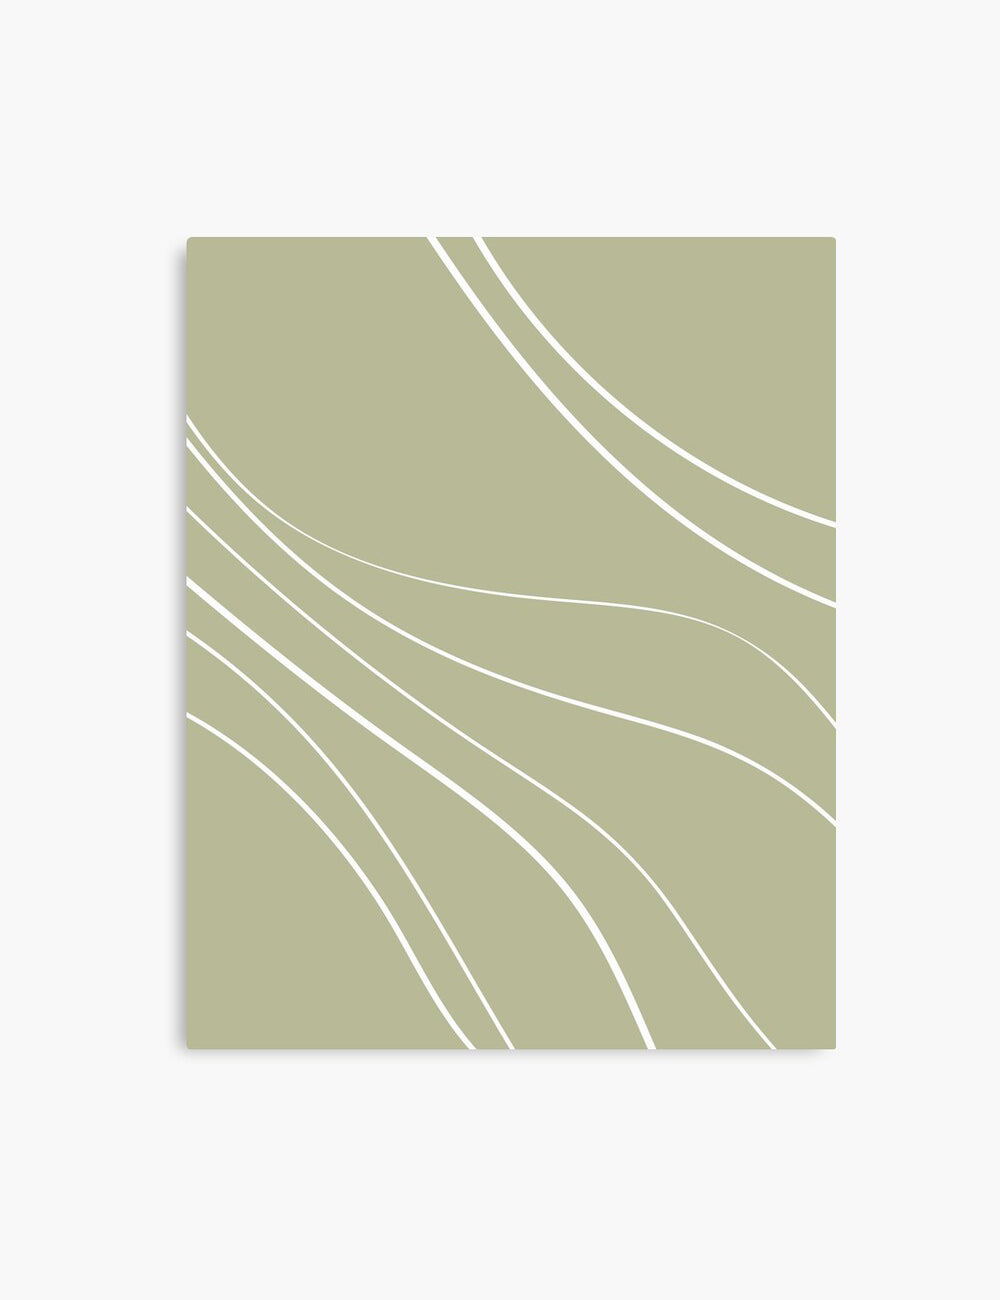 MINIMAL LINE ART. Abstract Waves. Boho. Green. Printable Wall Art Illustration. - PAPER MOON Art & Design